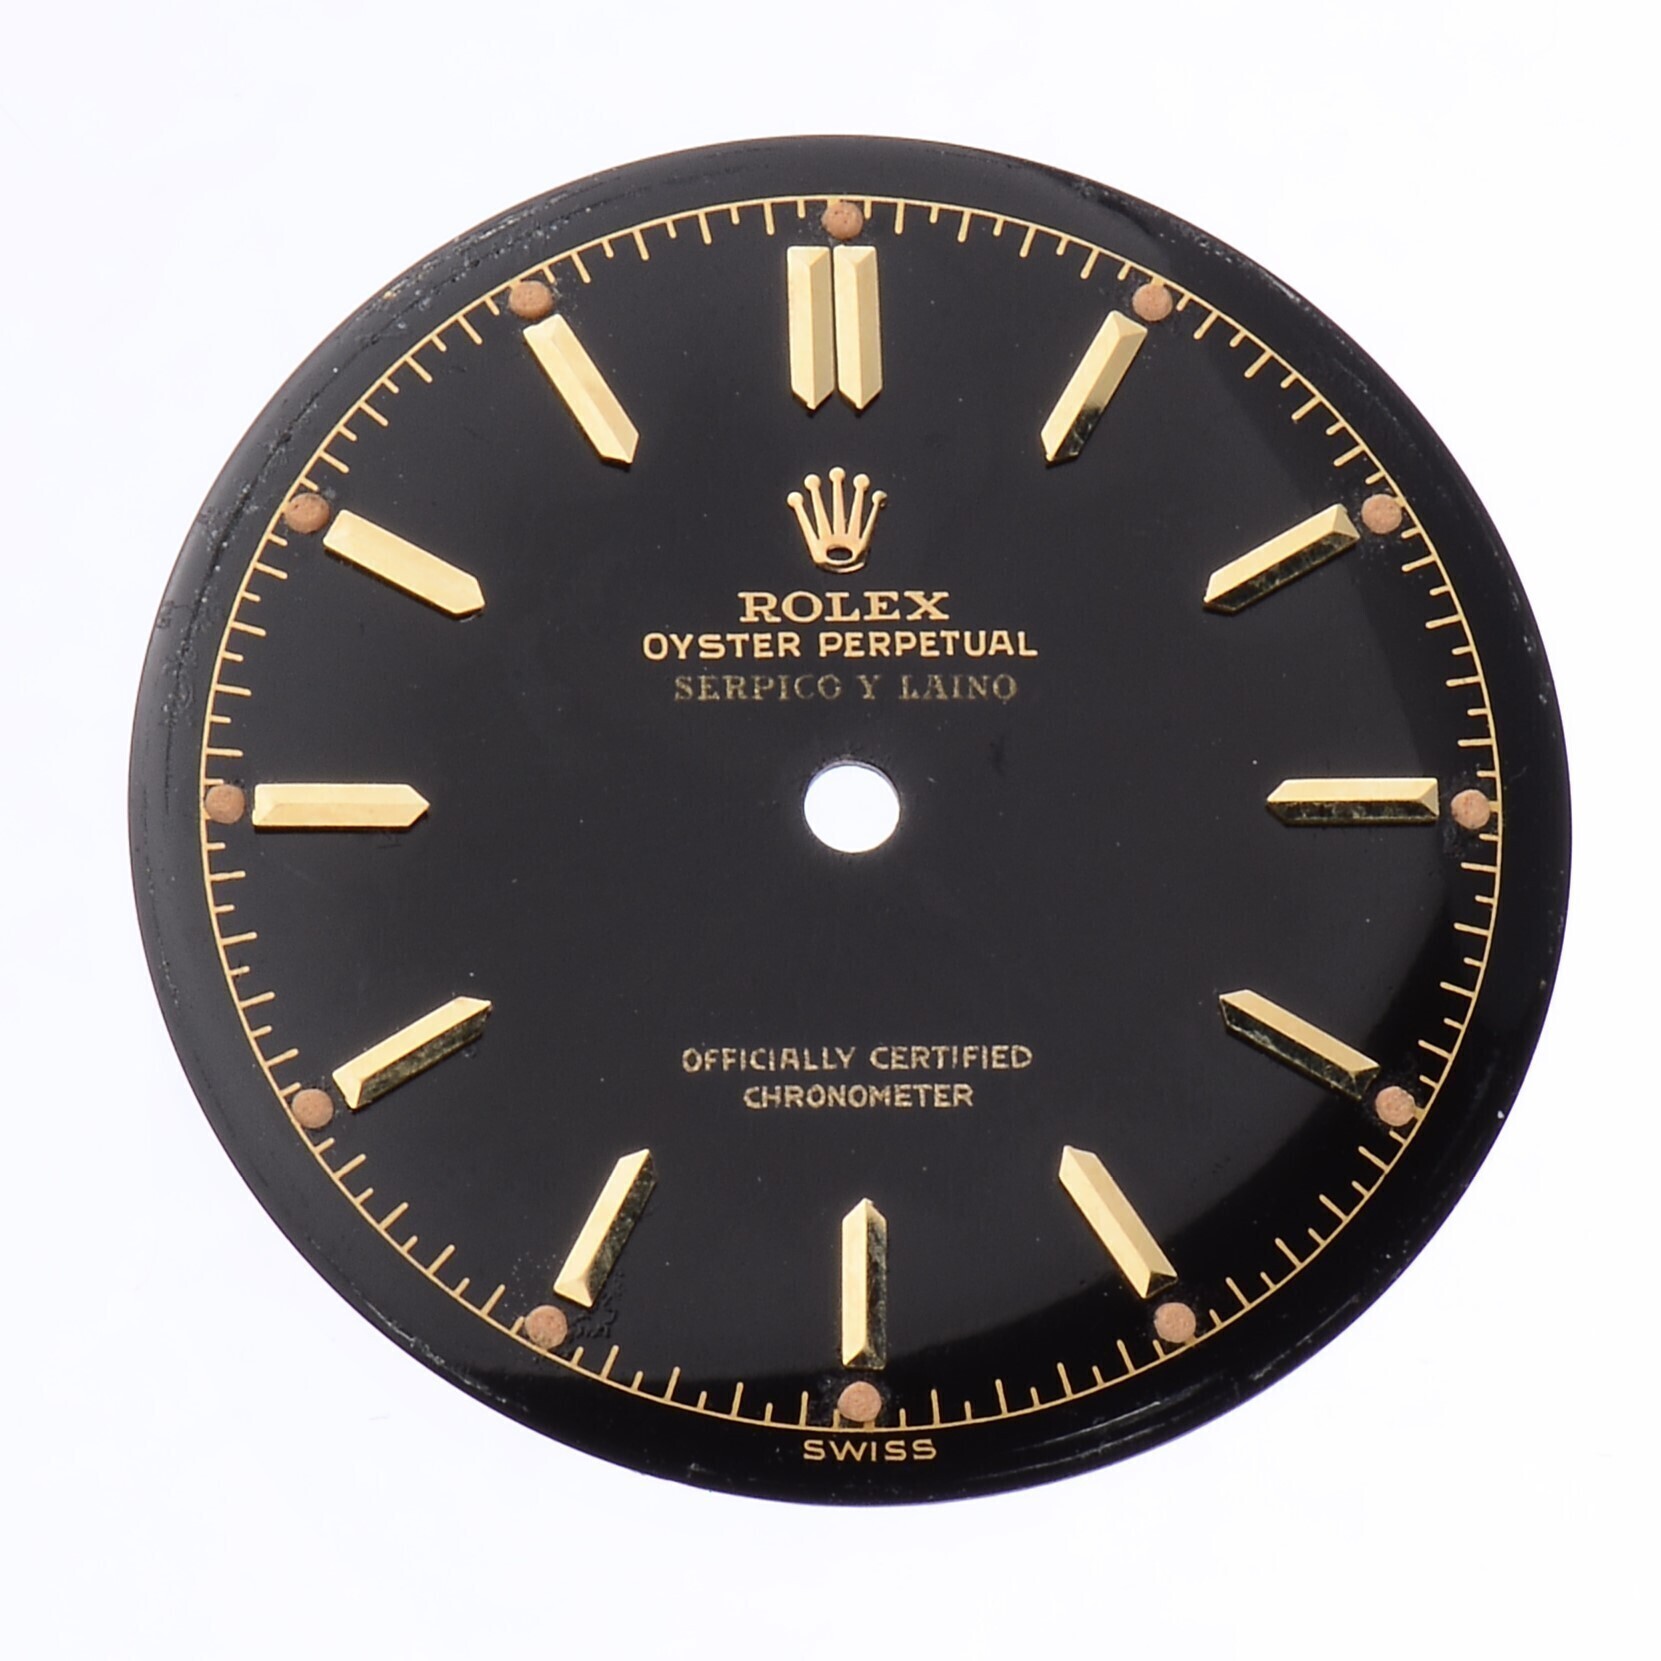 Rolex Serpico Y Laino Countersigned Original Oyster Perpetual Black Chronometer Dial